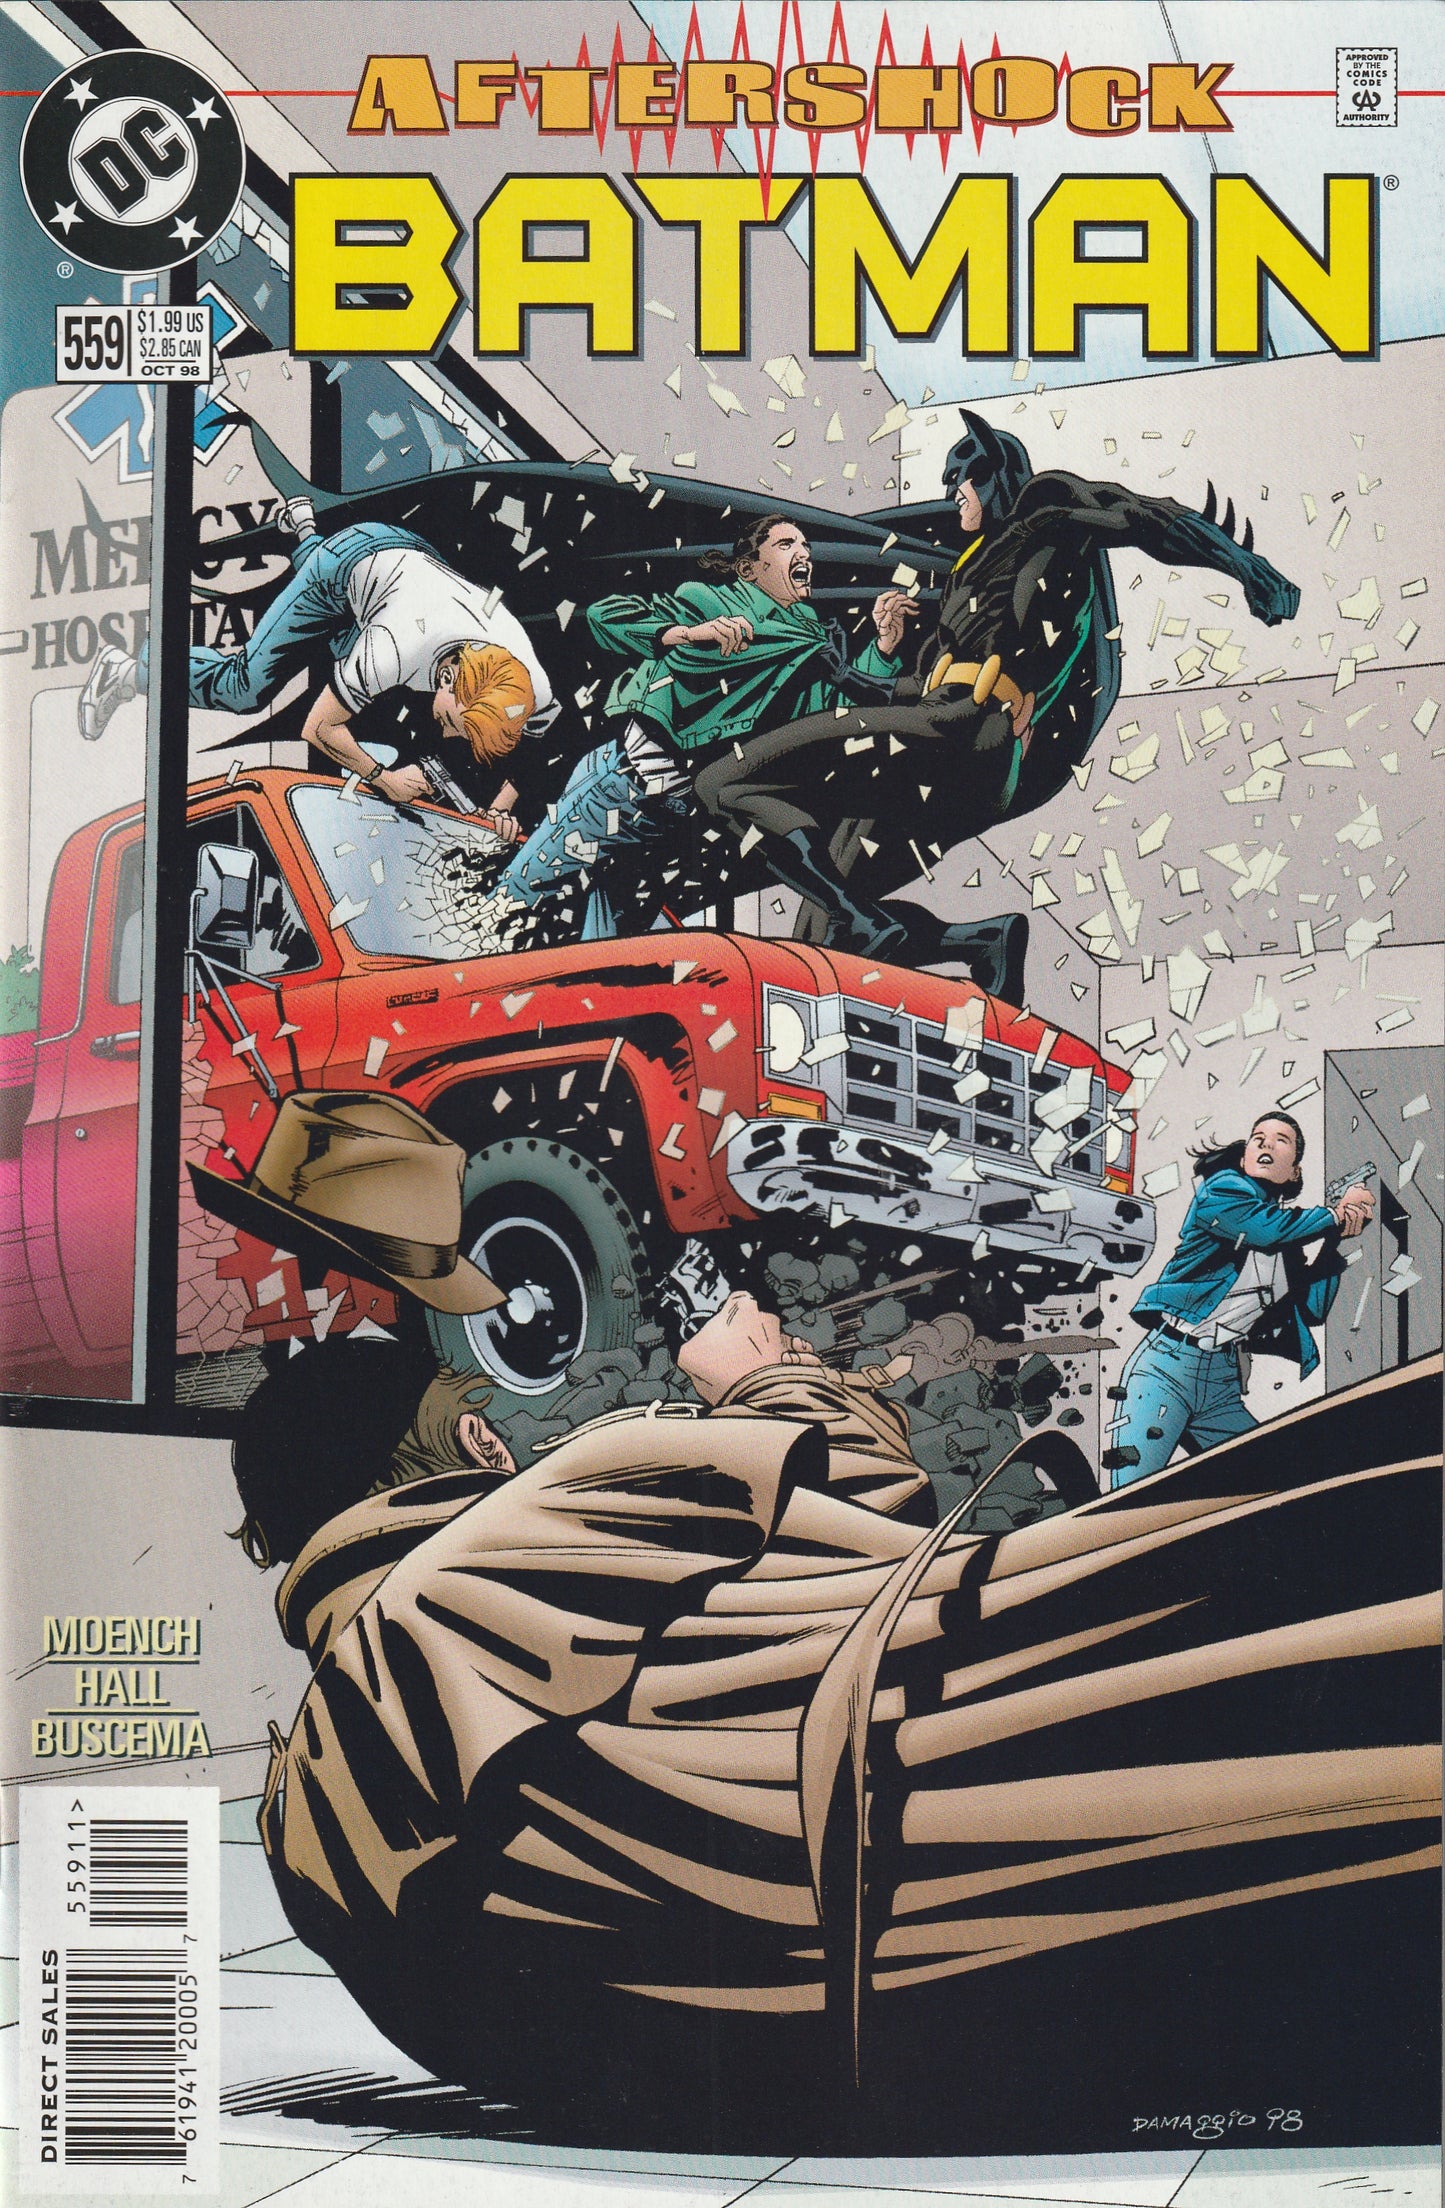 Batman #559 (1998) - Aftershock